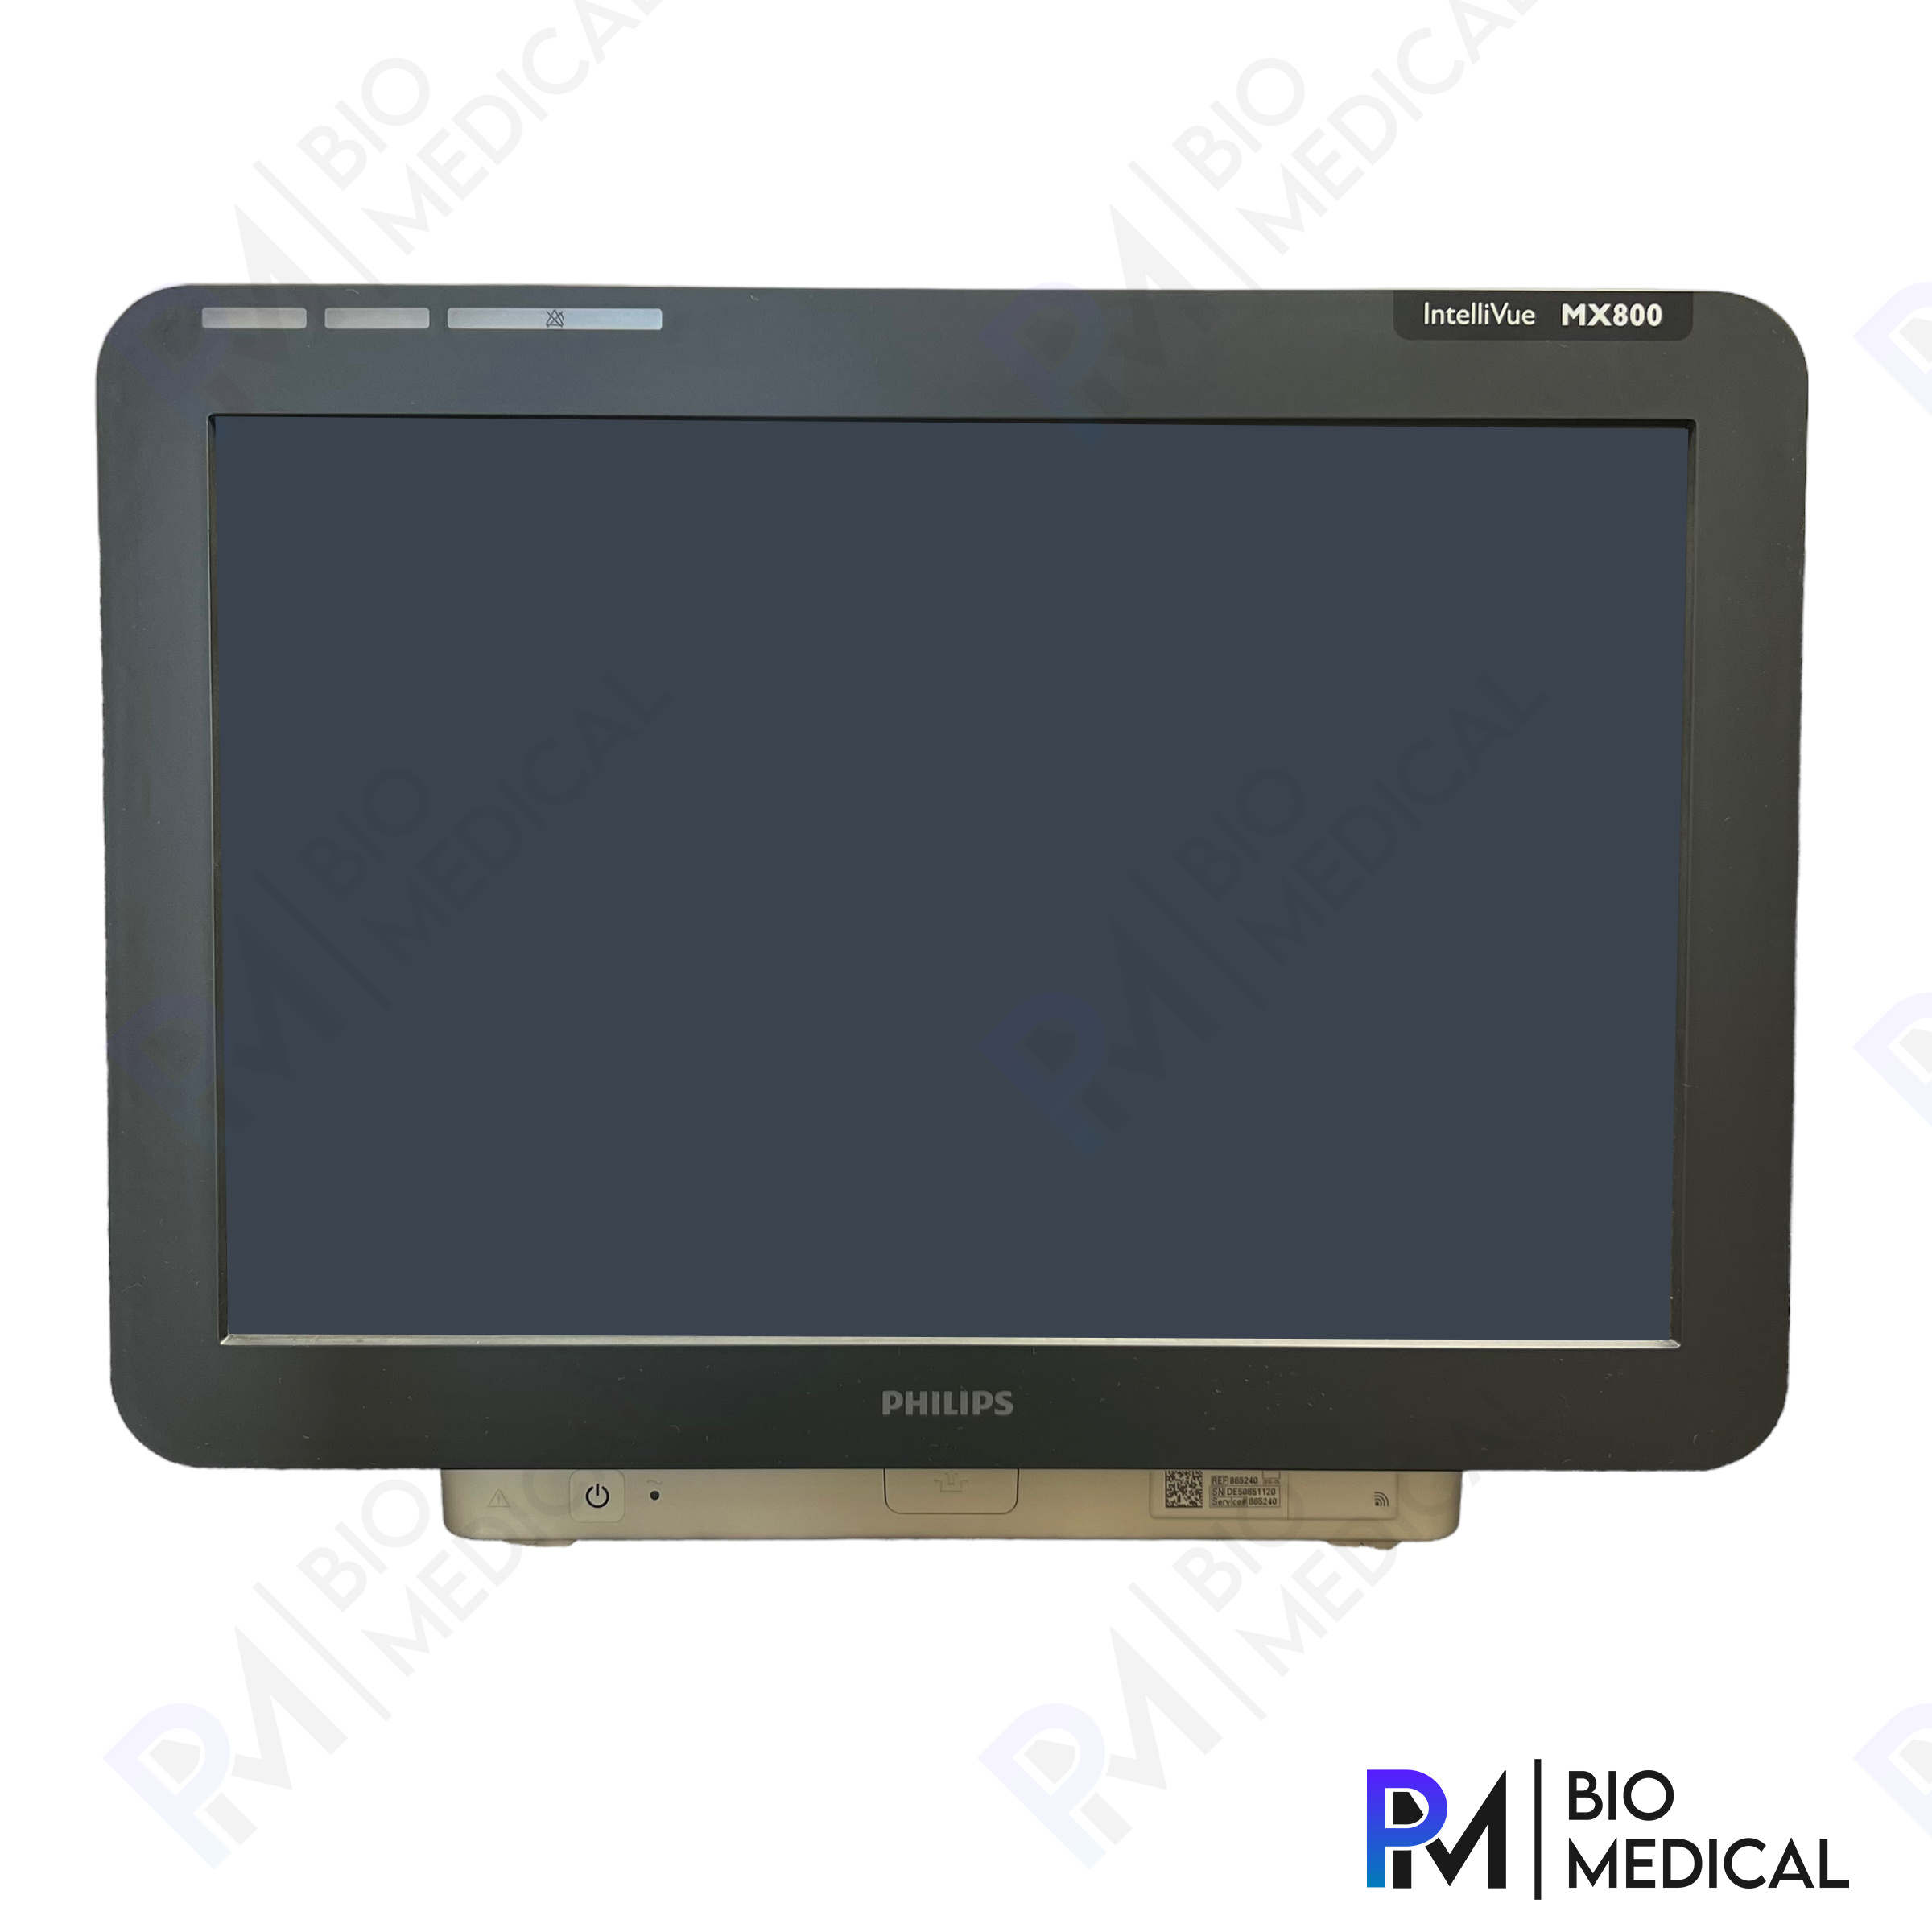 Philips Intellivue MX800 Bedside Patient Monitor